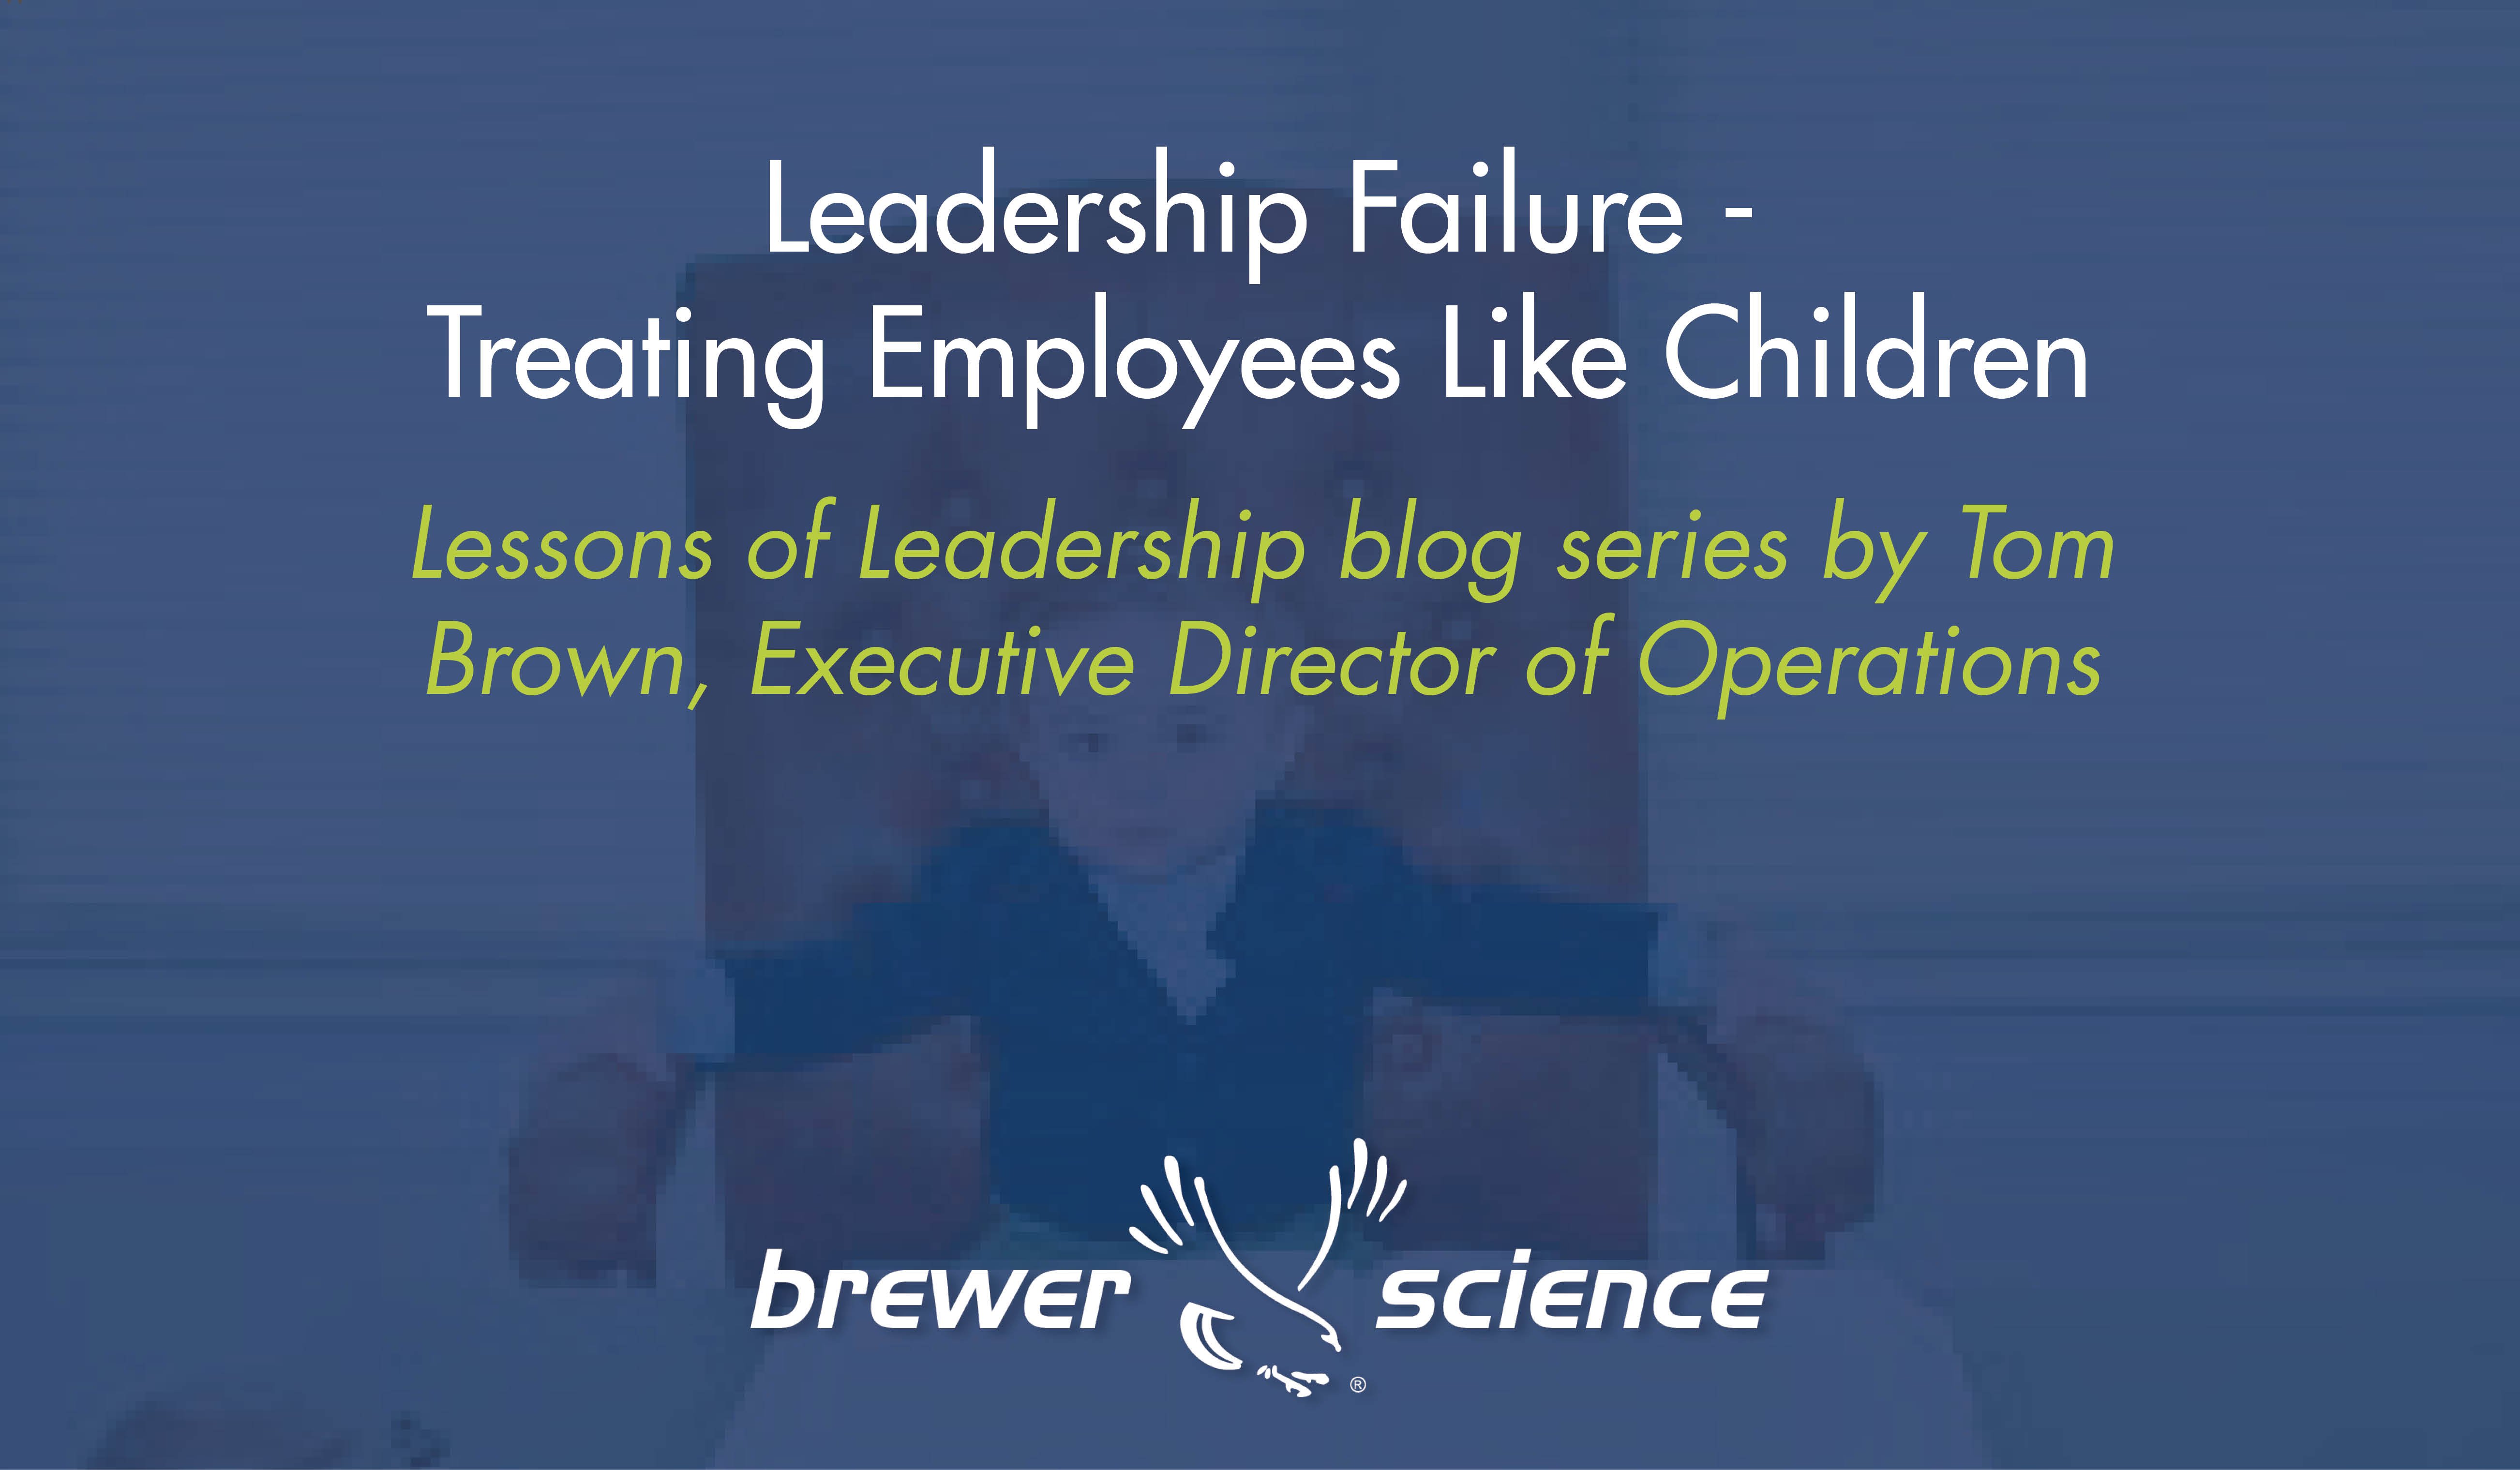 Leadership Failure - Treating Employees Like Children